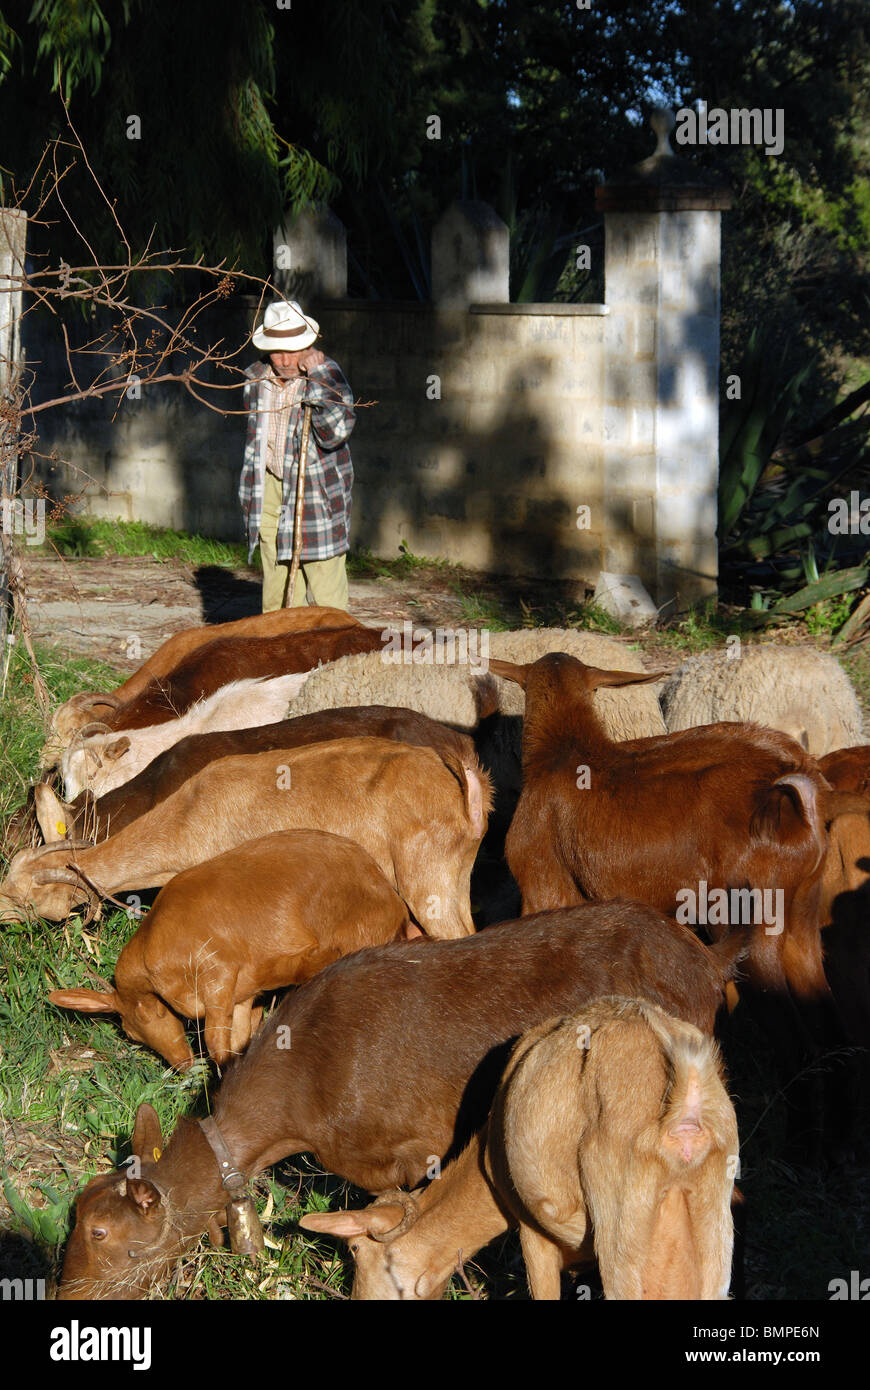 Goatherd and shepherd, Alozaina, Malaga Province, Andalucia, Spain, Western Europe. Stock Photo